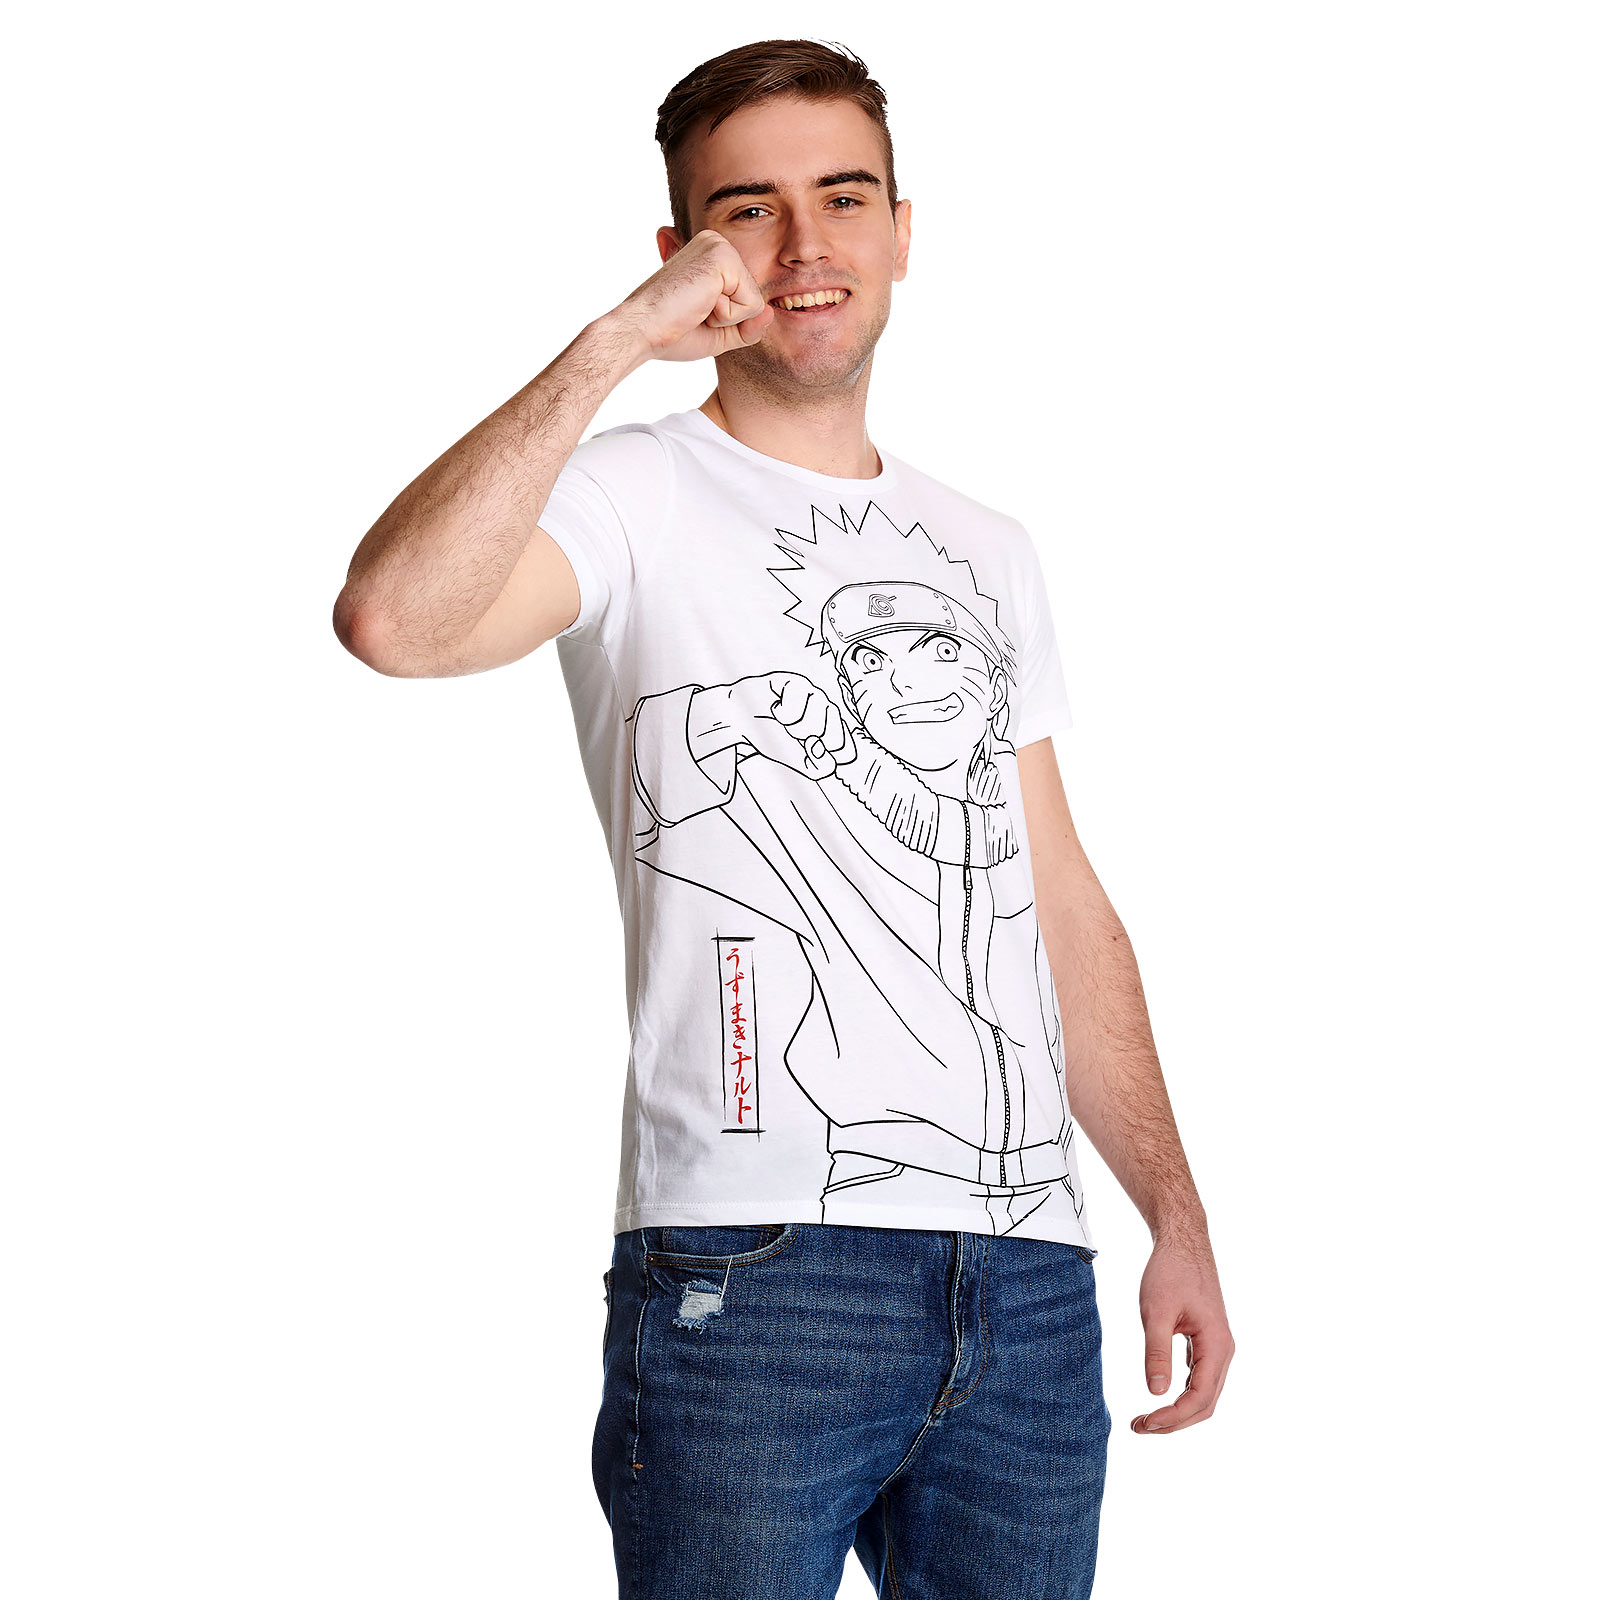 Naruto - Monochroom Schets T-shirt wit